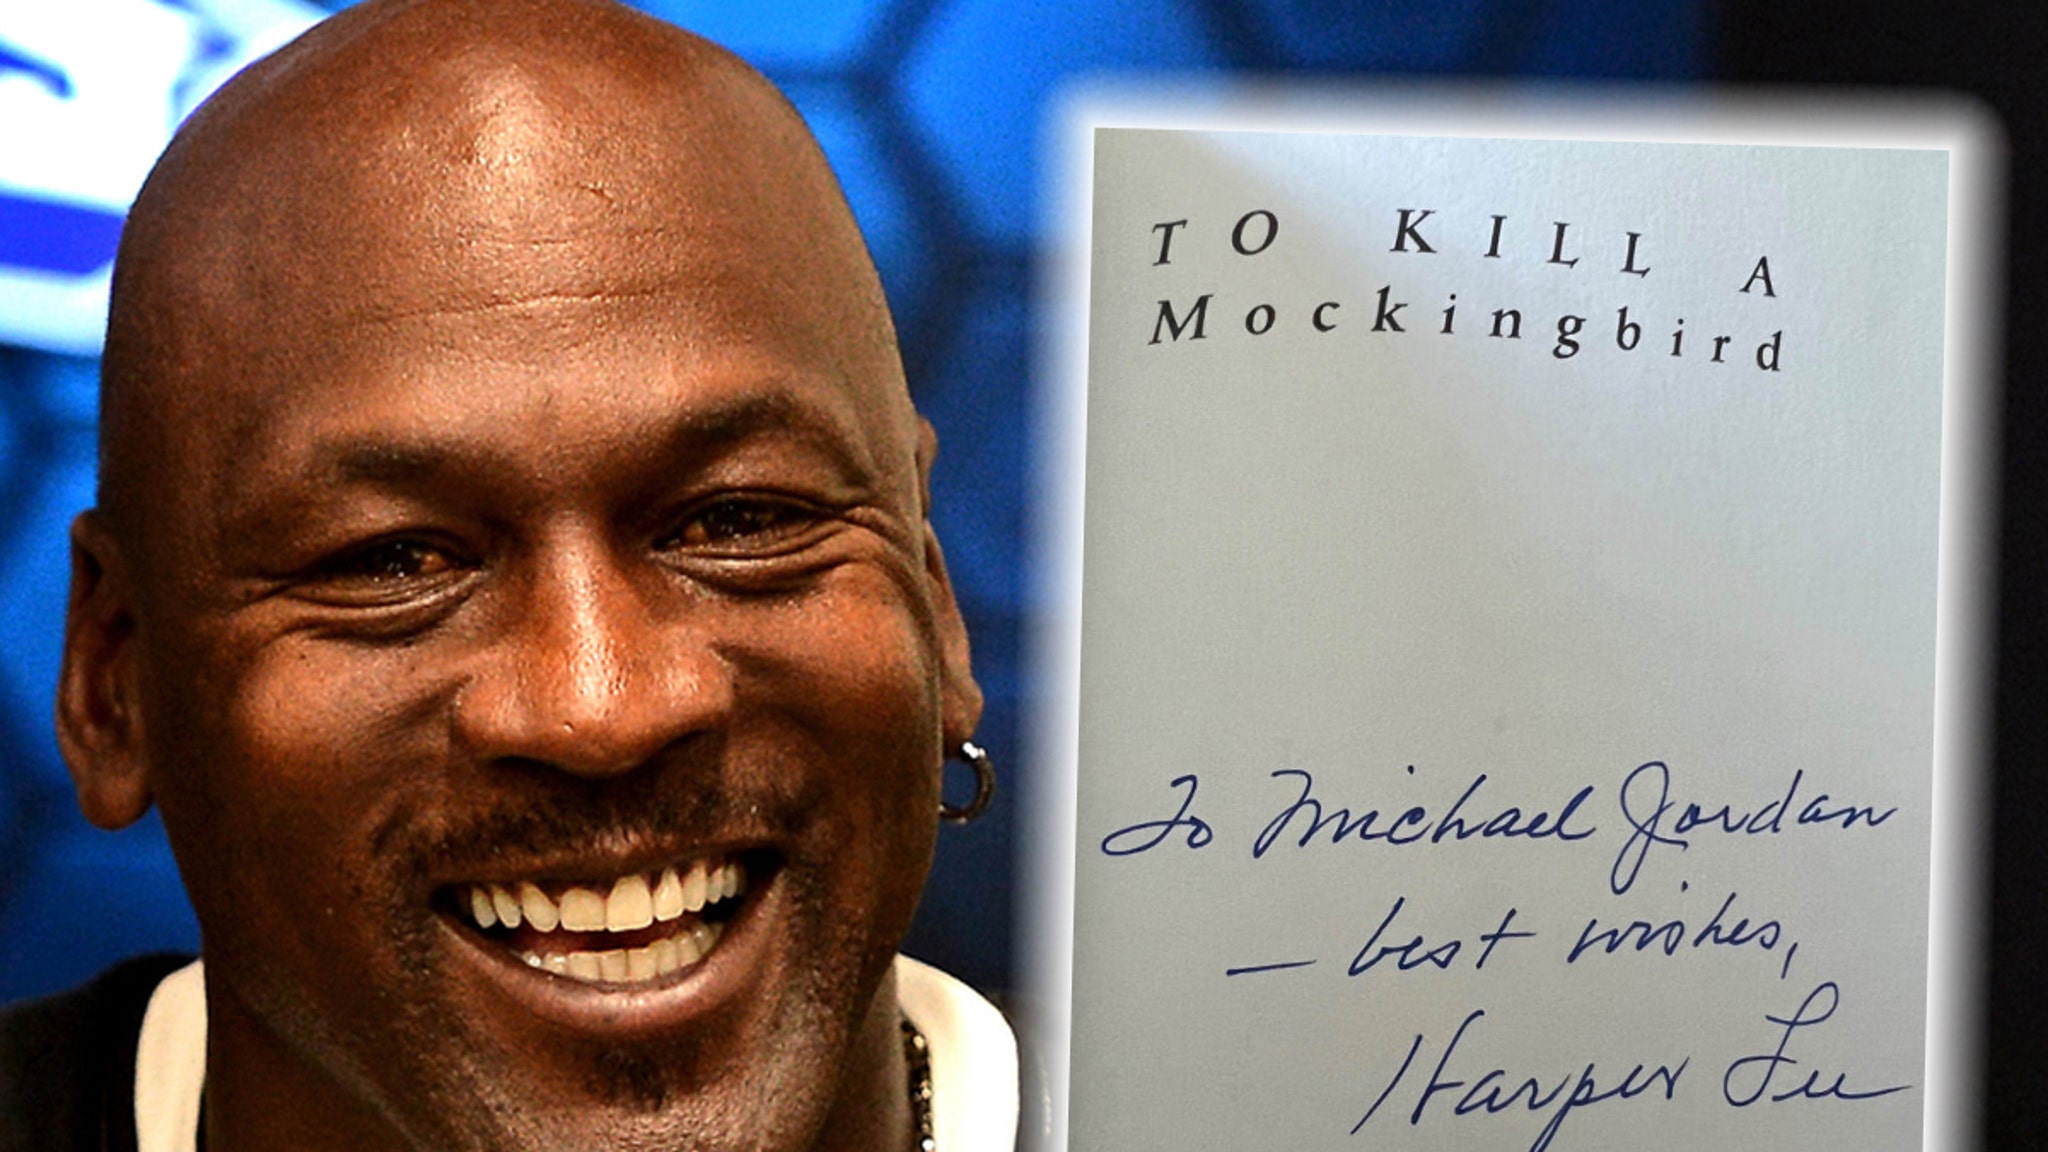 Harper Lee's signed book "To Kill a Mockingbird" by Michael Jordan on sale